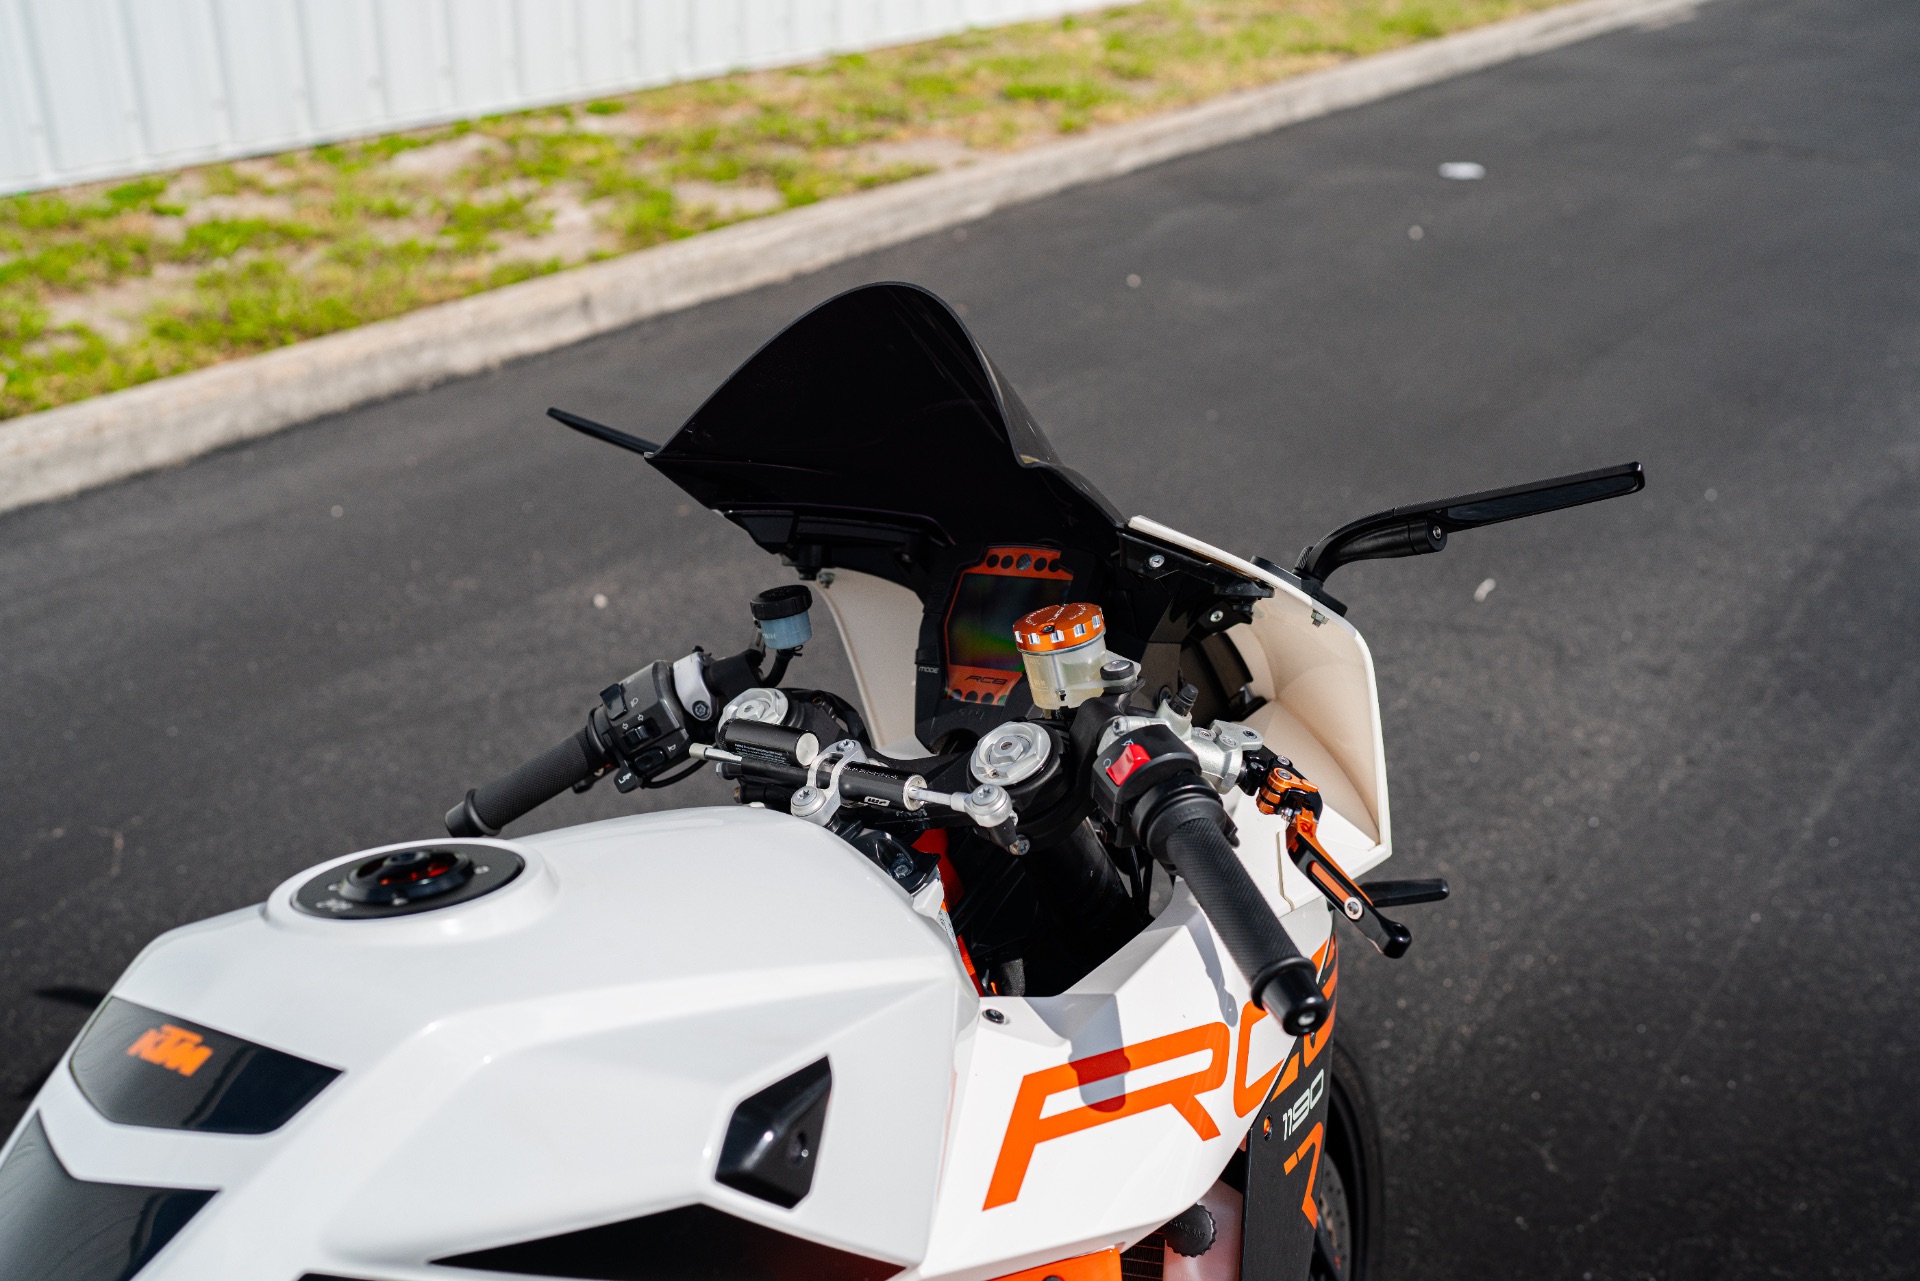 2014 KTM 1190 RC8 R in Jacksonville, Florida - Photo 9